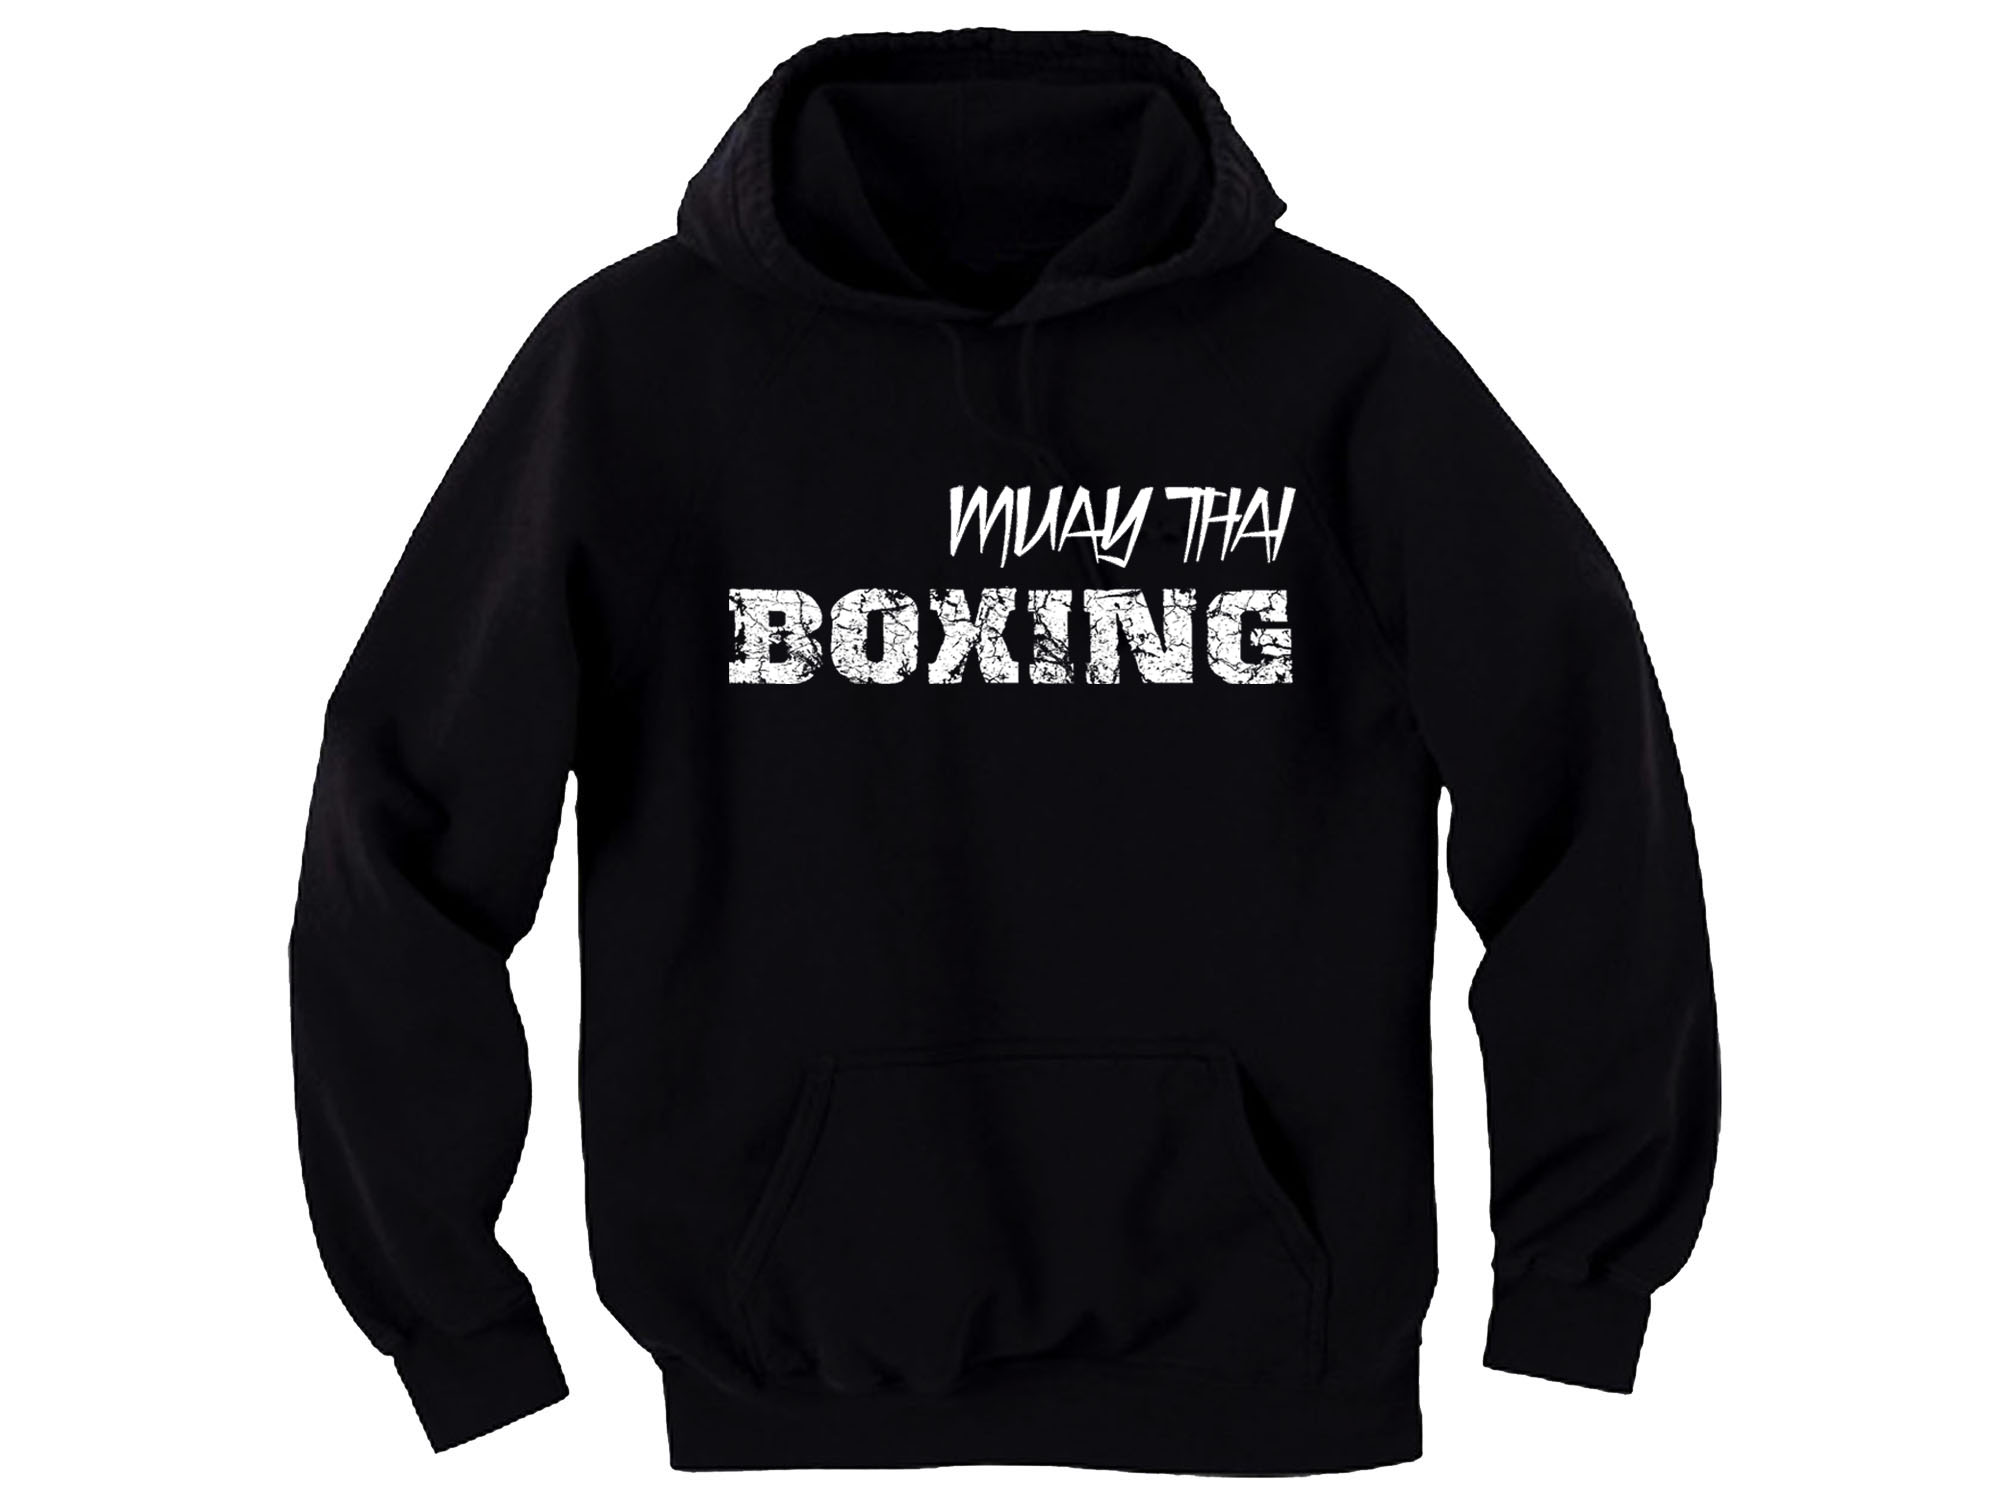 Muay Thai boxing distressed print hooded sweatshirt